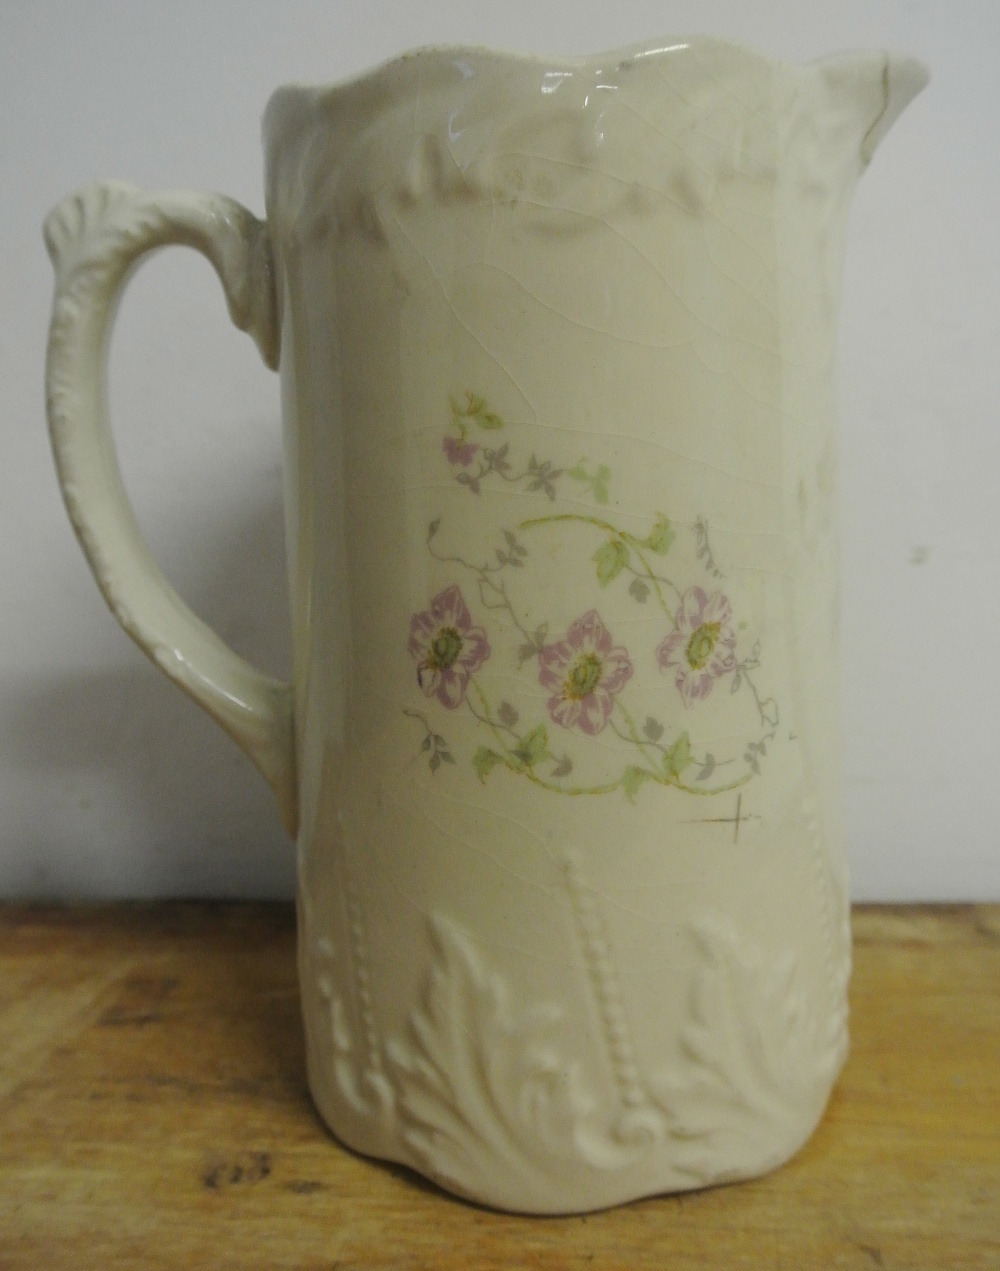 CERAMICS/ GLASS - An antique ceramic jug with mili - Image 2 of 3